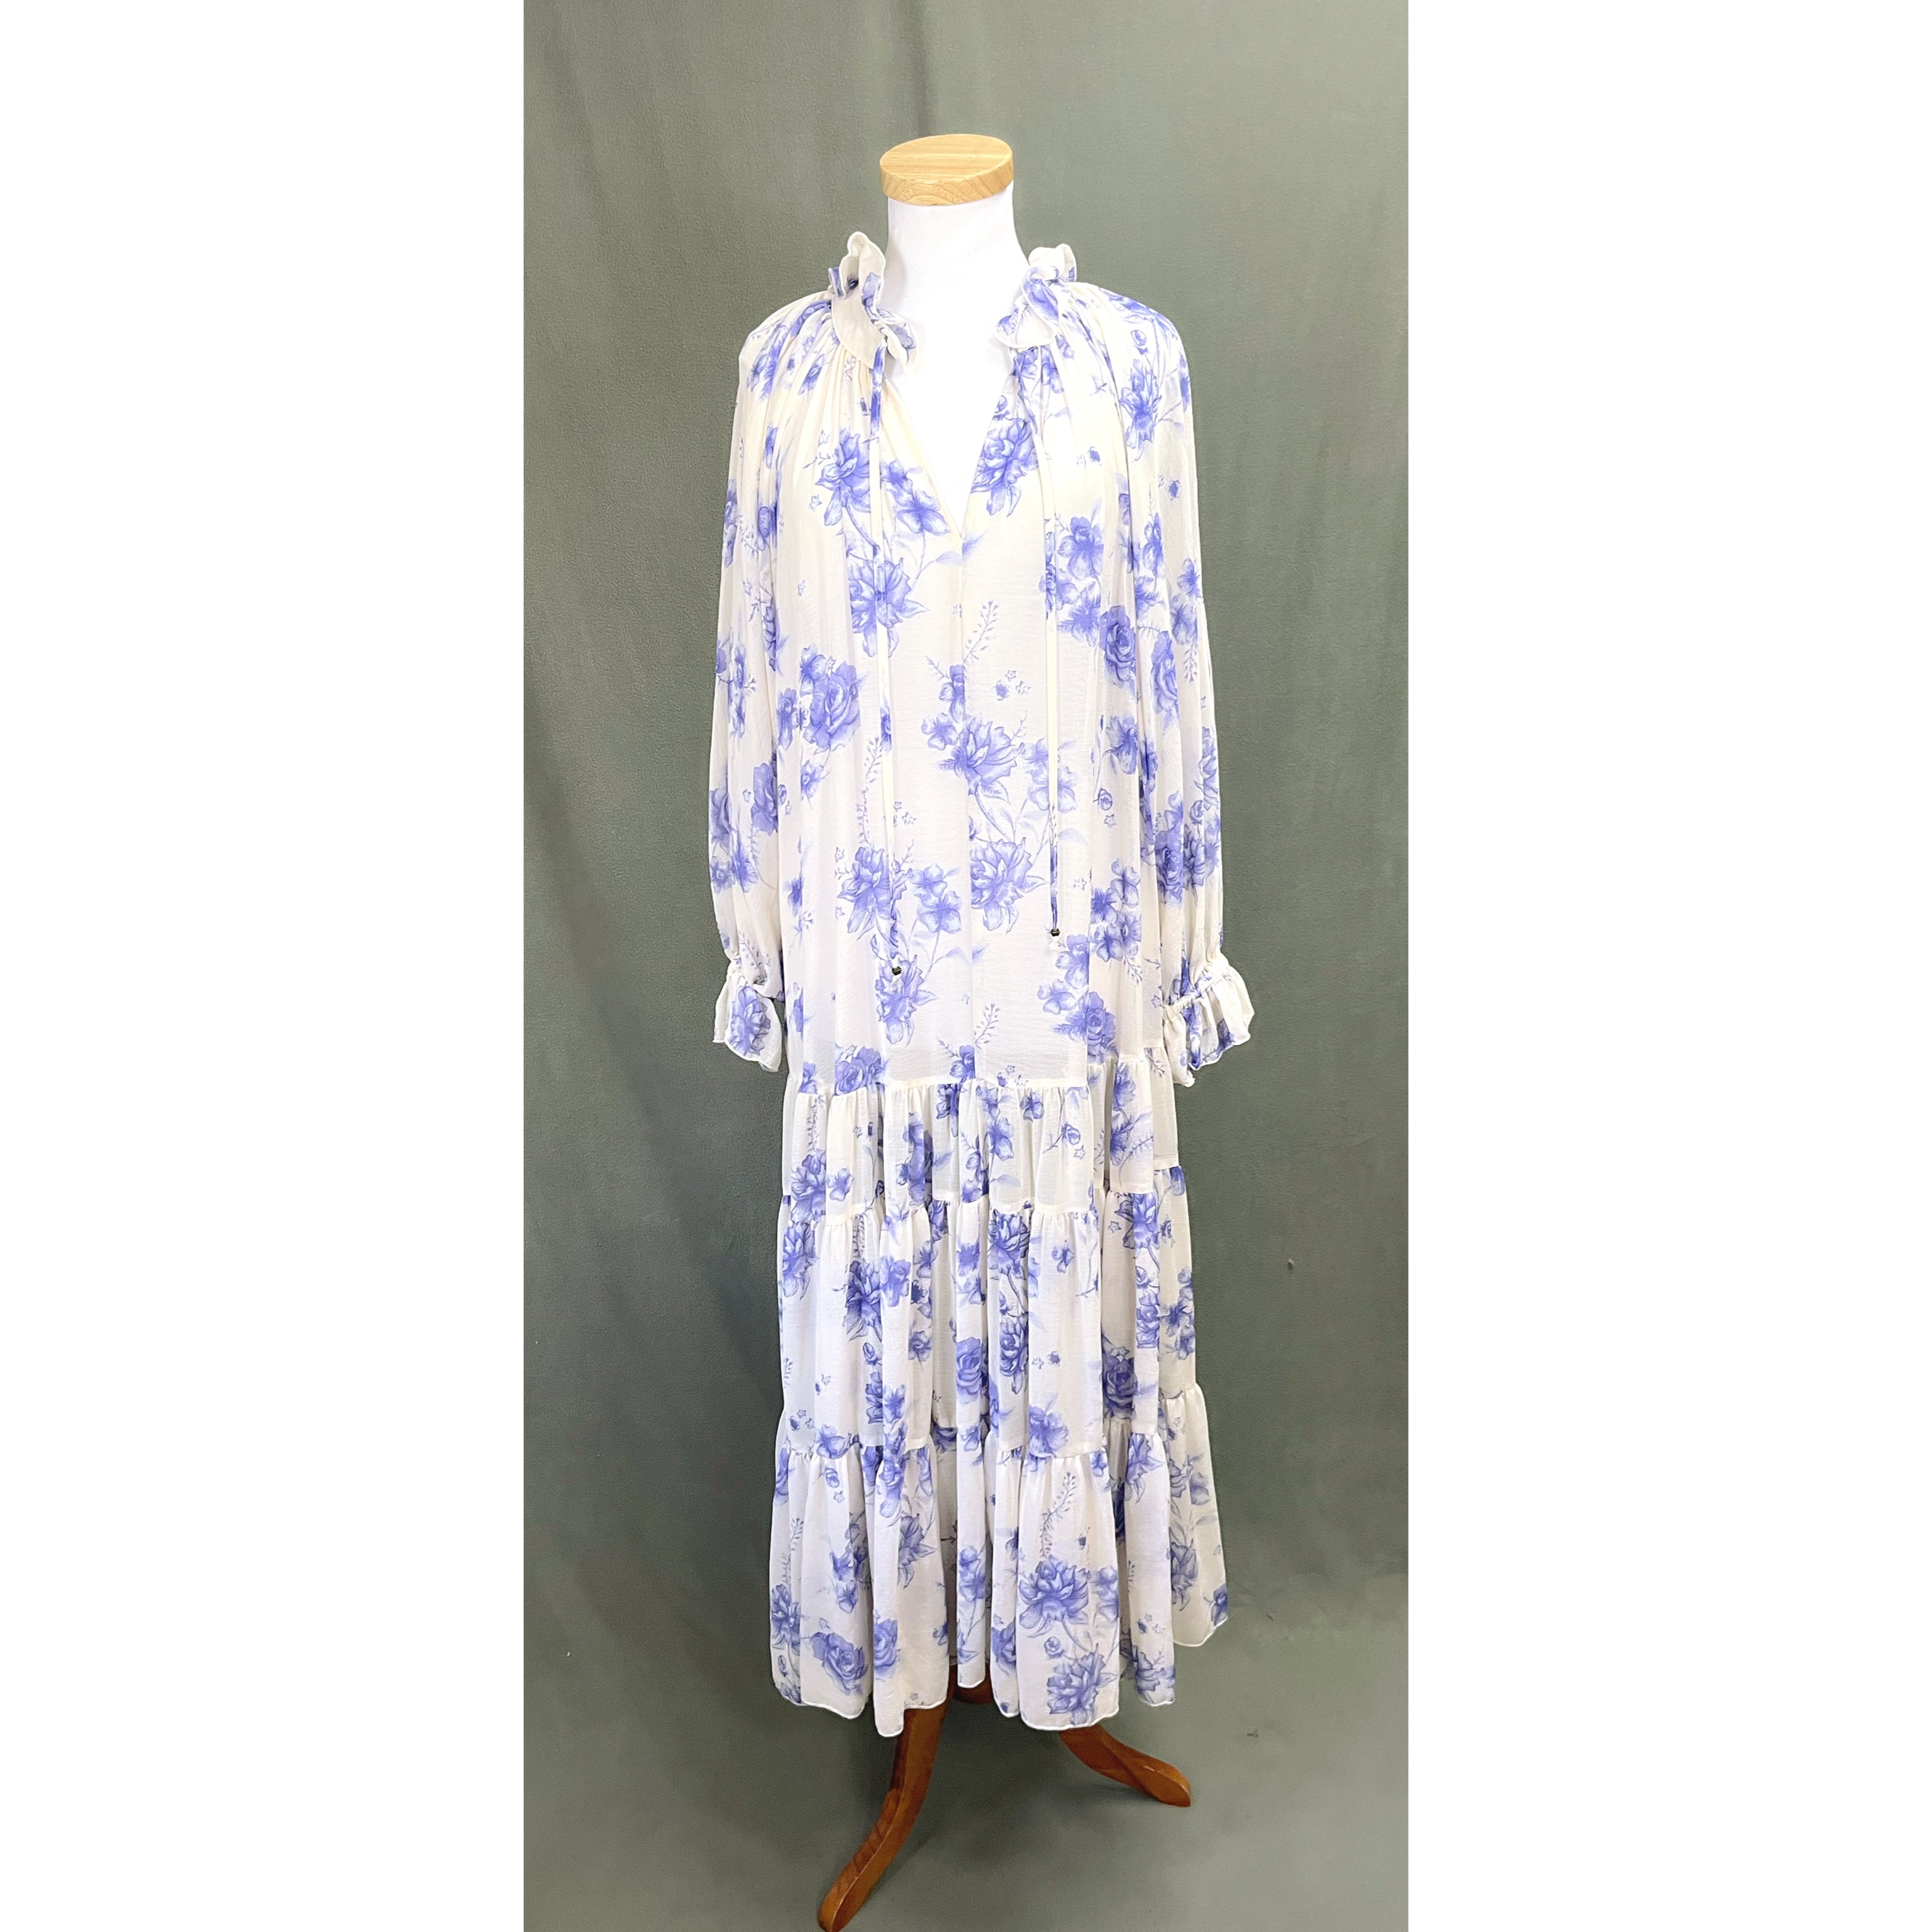 Free People lavender floral dress, size S